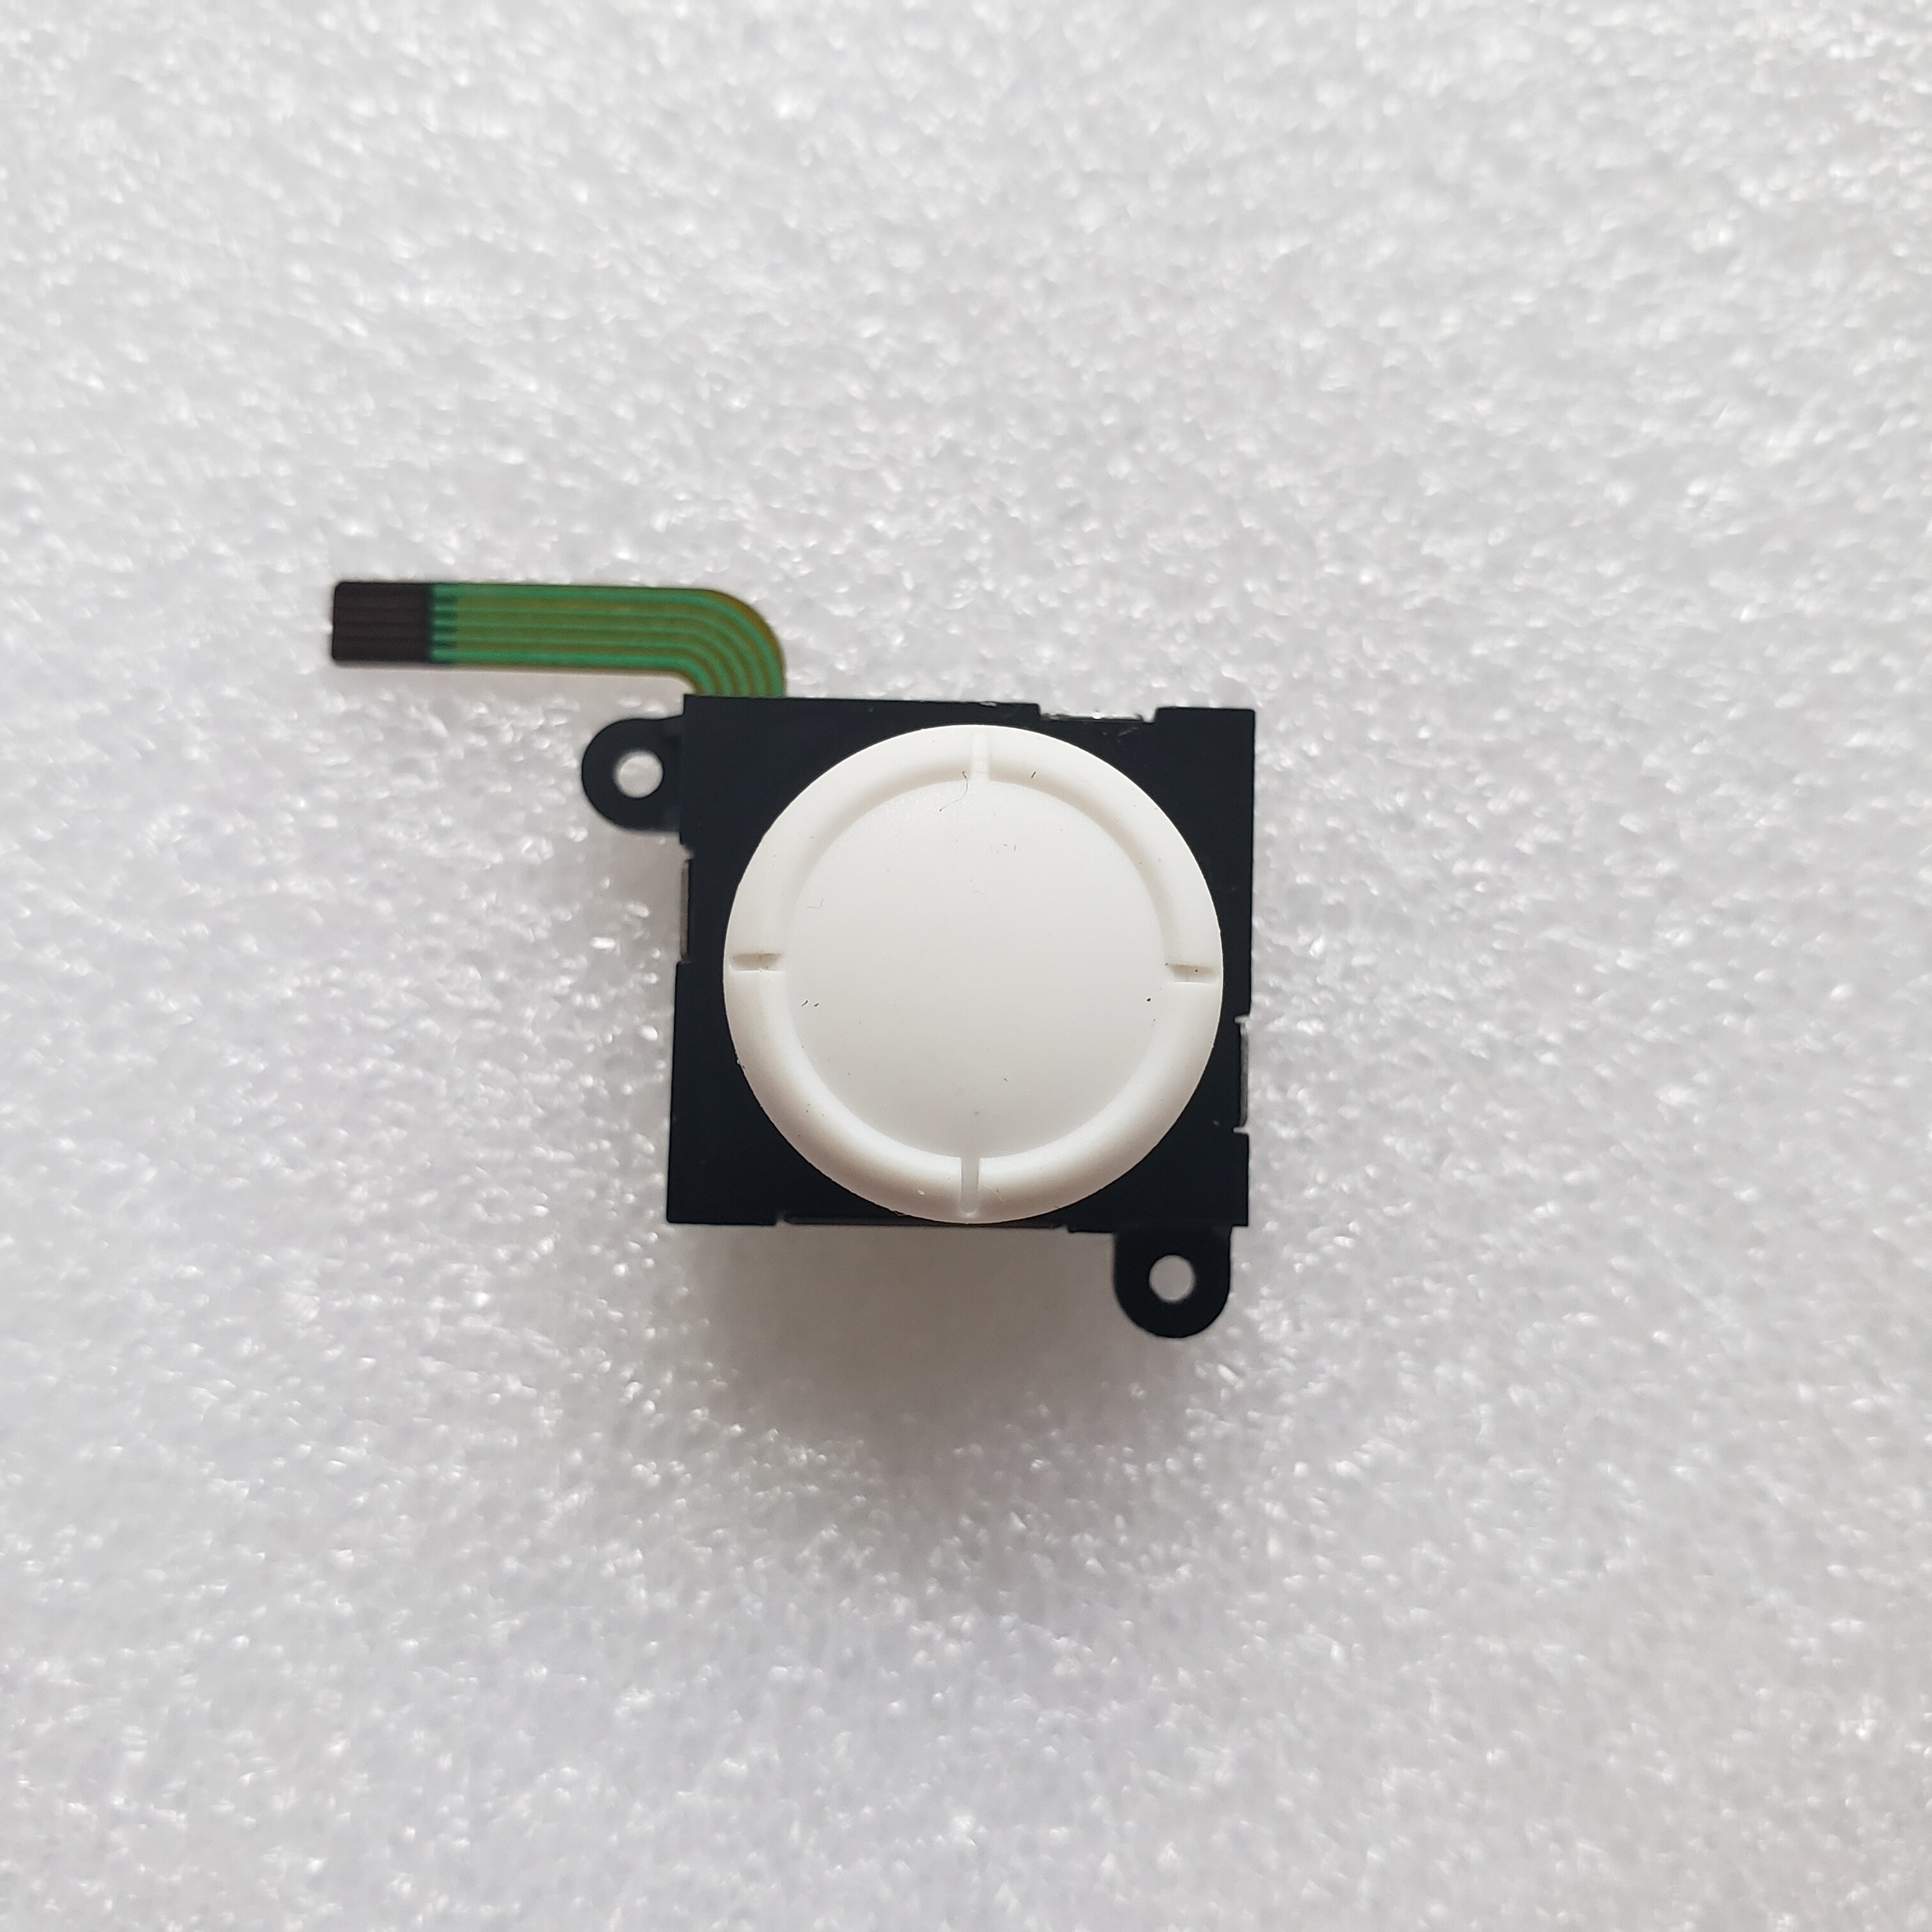 3d vita analoga joystick tumspak grepplock sensormodul kontrollvippa för nintend switch lite joy-con kontrollerknapp